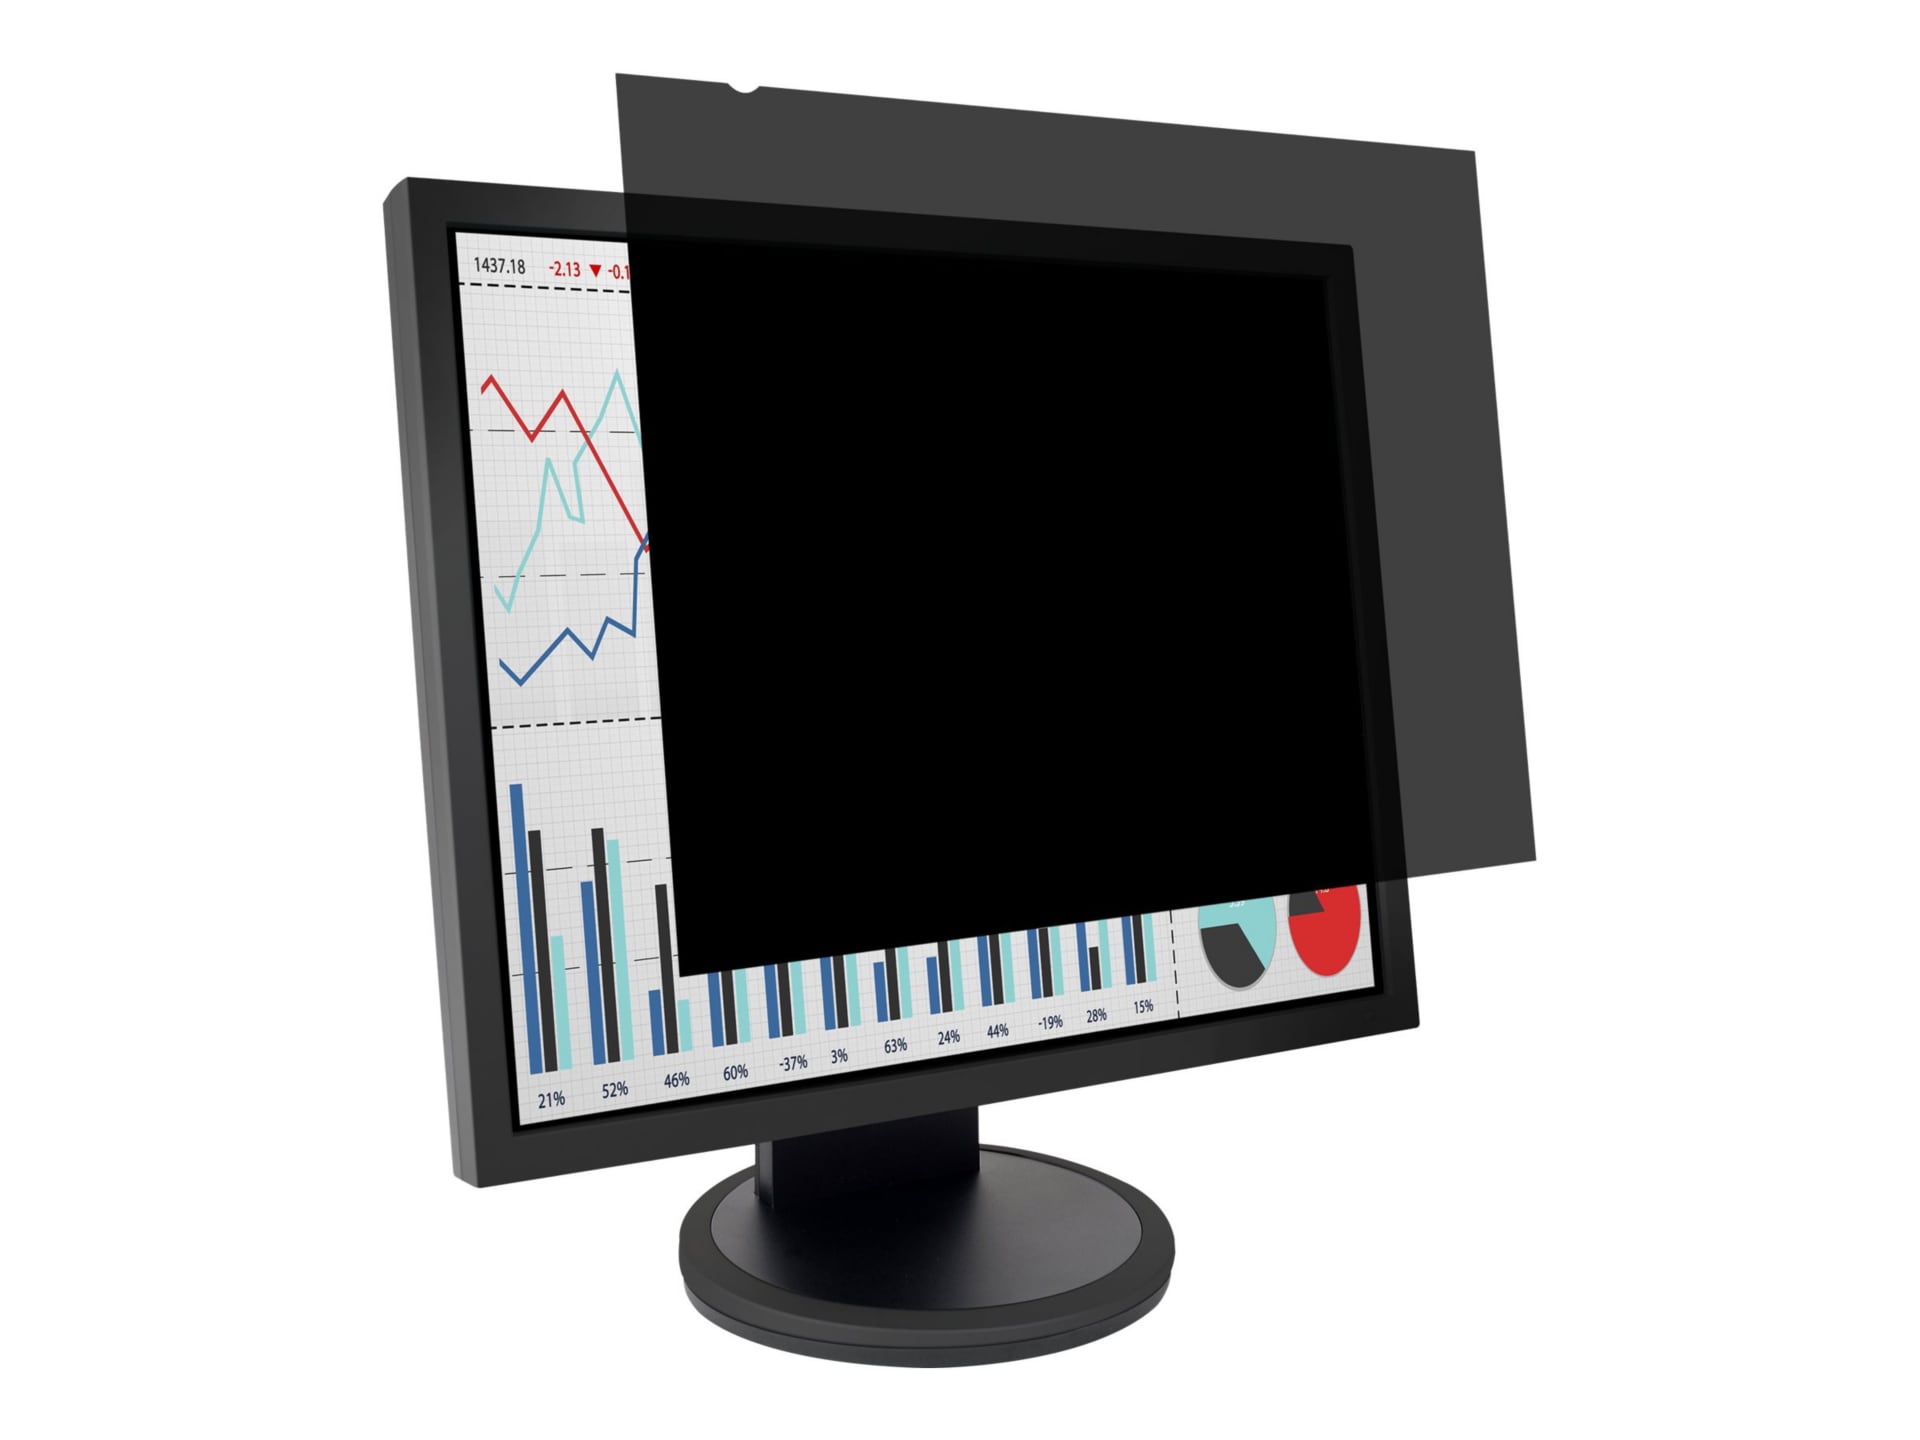 Kensington FP190 Monitors Privacy Screen 19" (5:4) - display screen protect